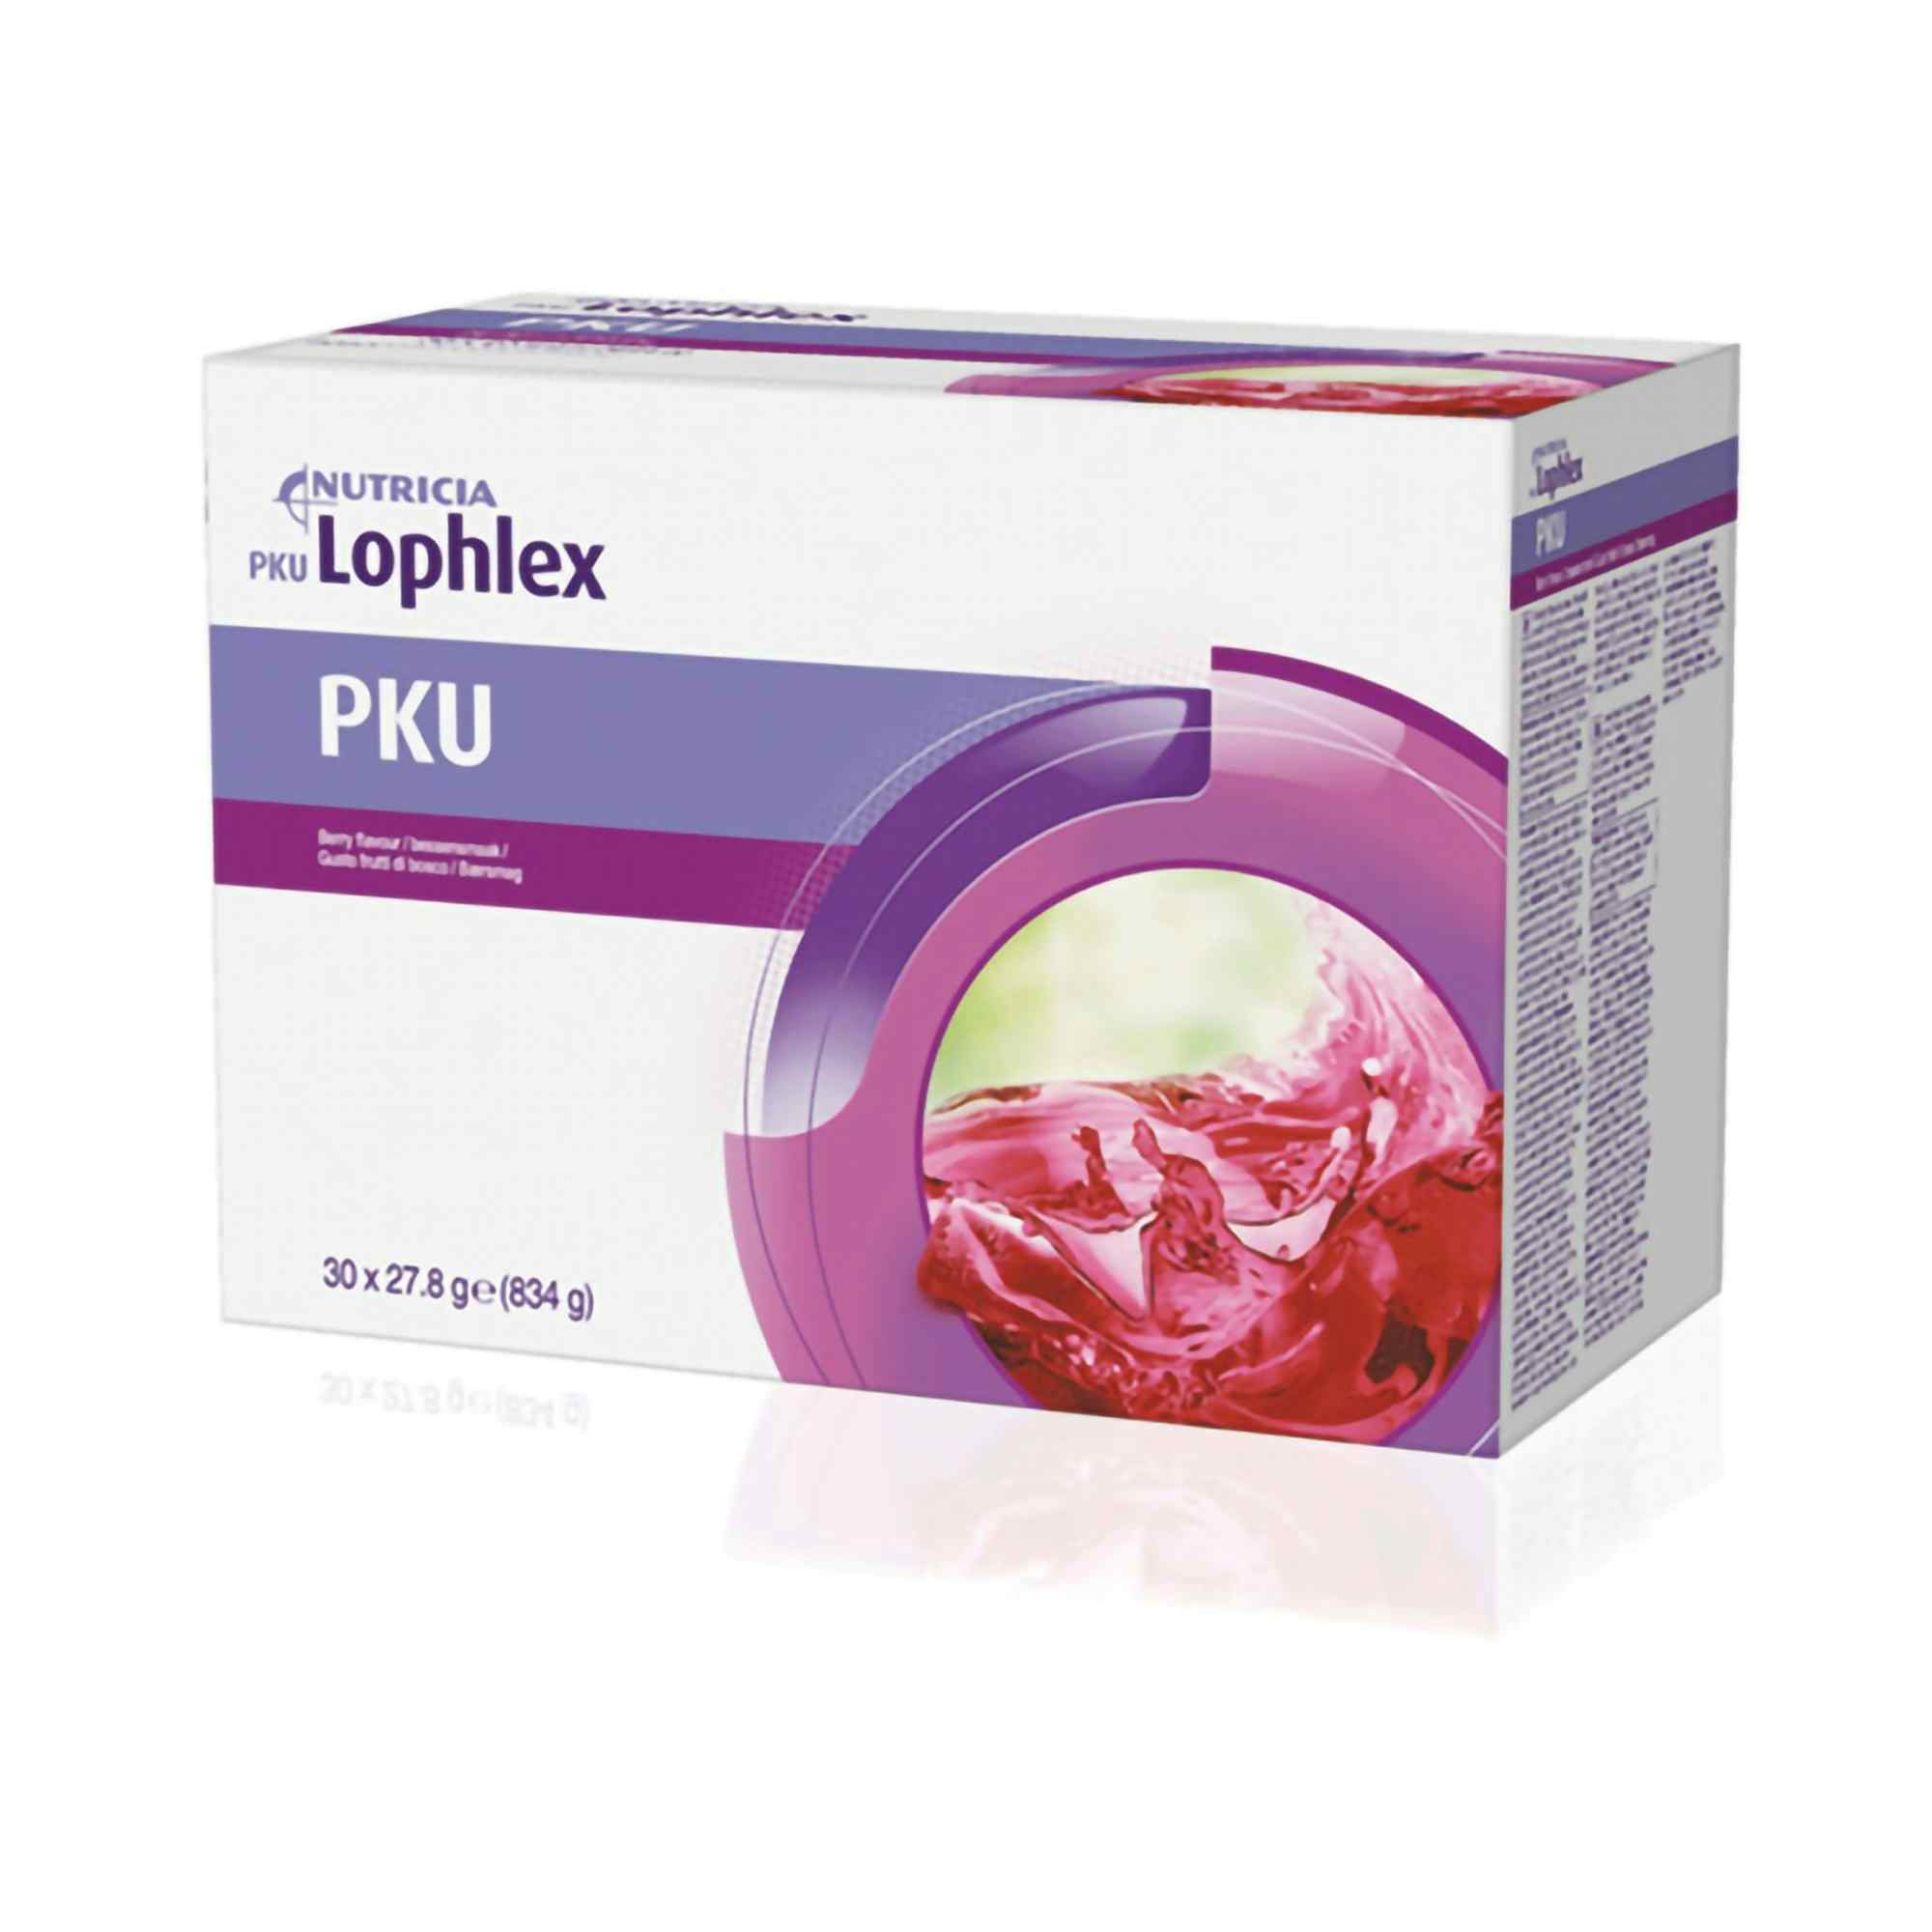 Nutrica Lophlex PKU Oral Supplement, Unflavored, 14.3 Gram, 49418, Case of 30